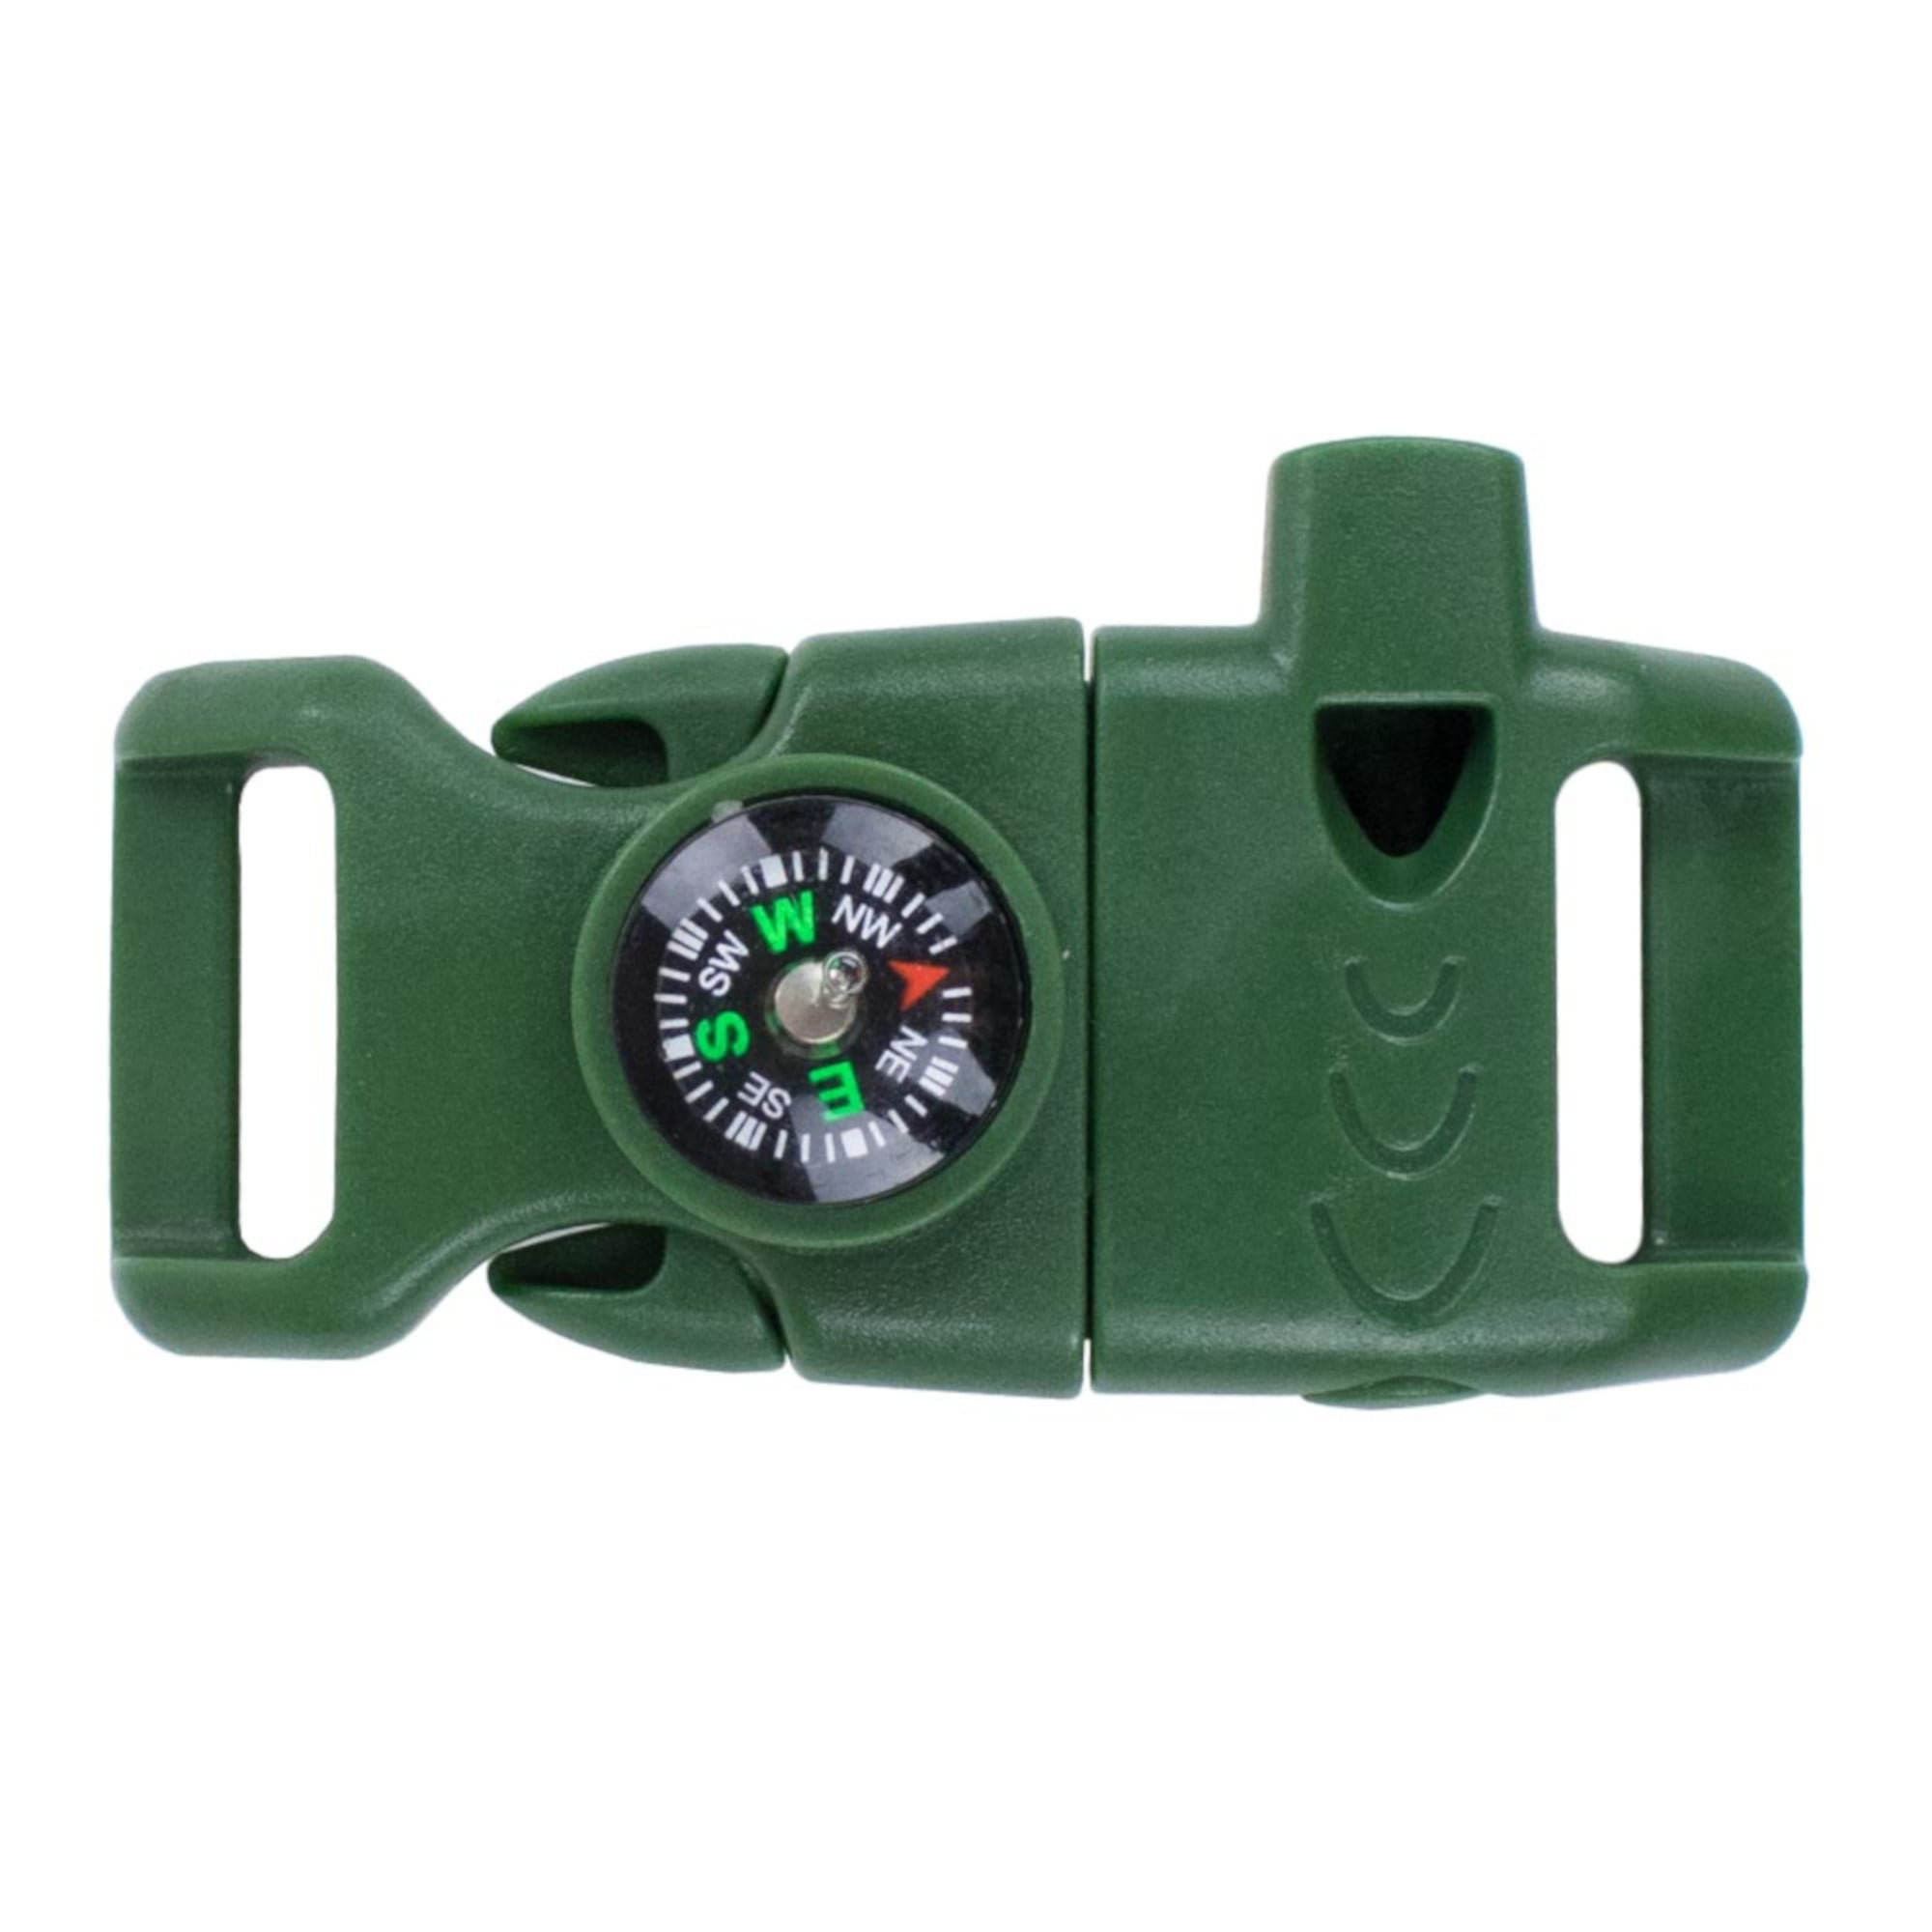 ASR Outdoor Paracord Bracelet Side Release Buckle Set Many Sizes, Colors